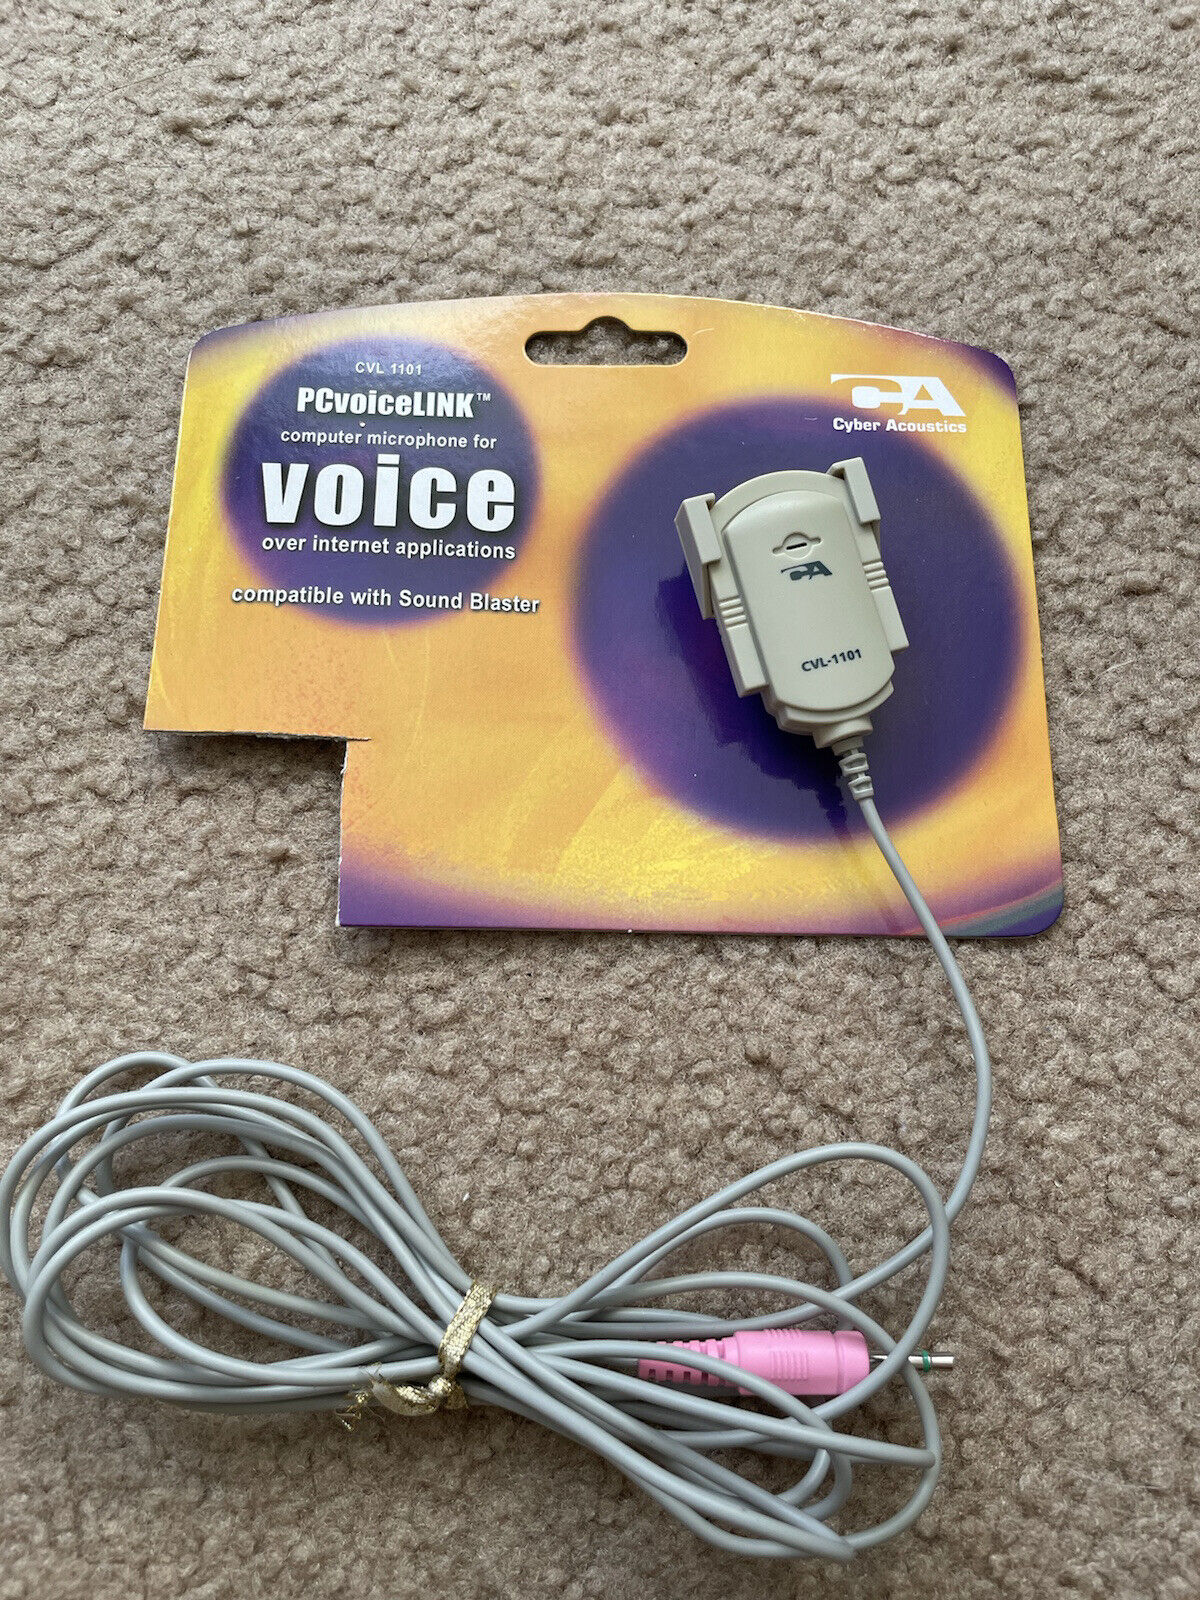 PCvoiceLINK, Cyber Acoustics, CVL 1101, computer microphone for voice